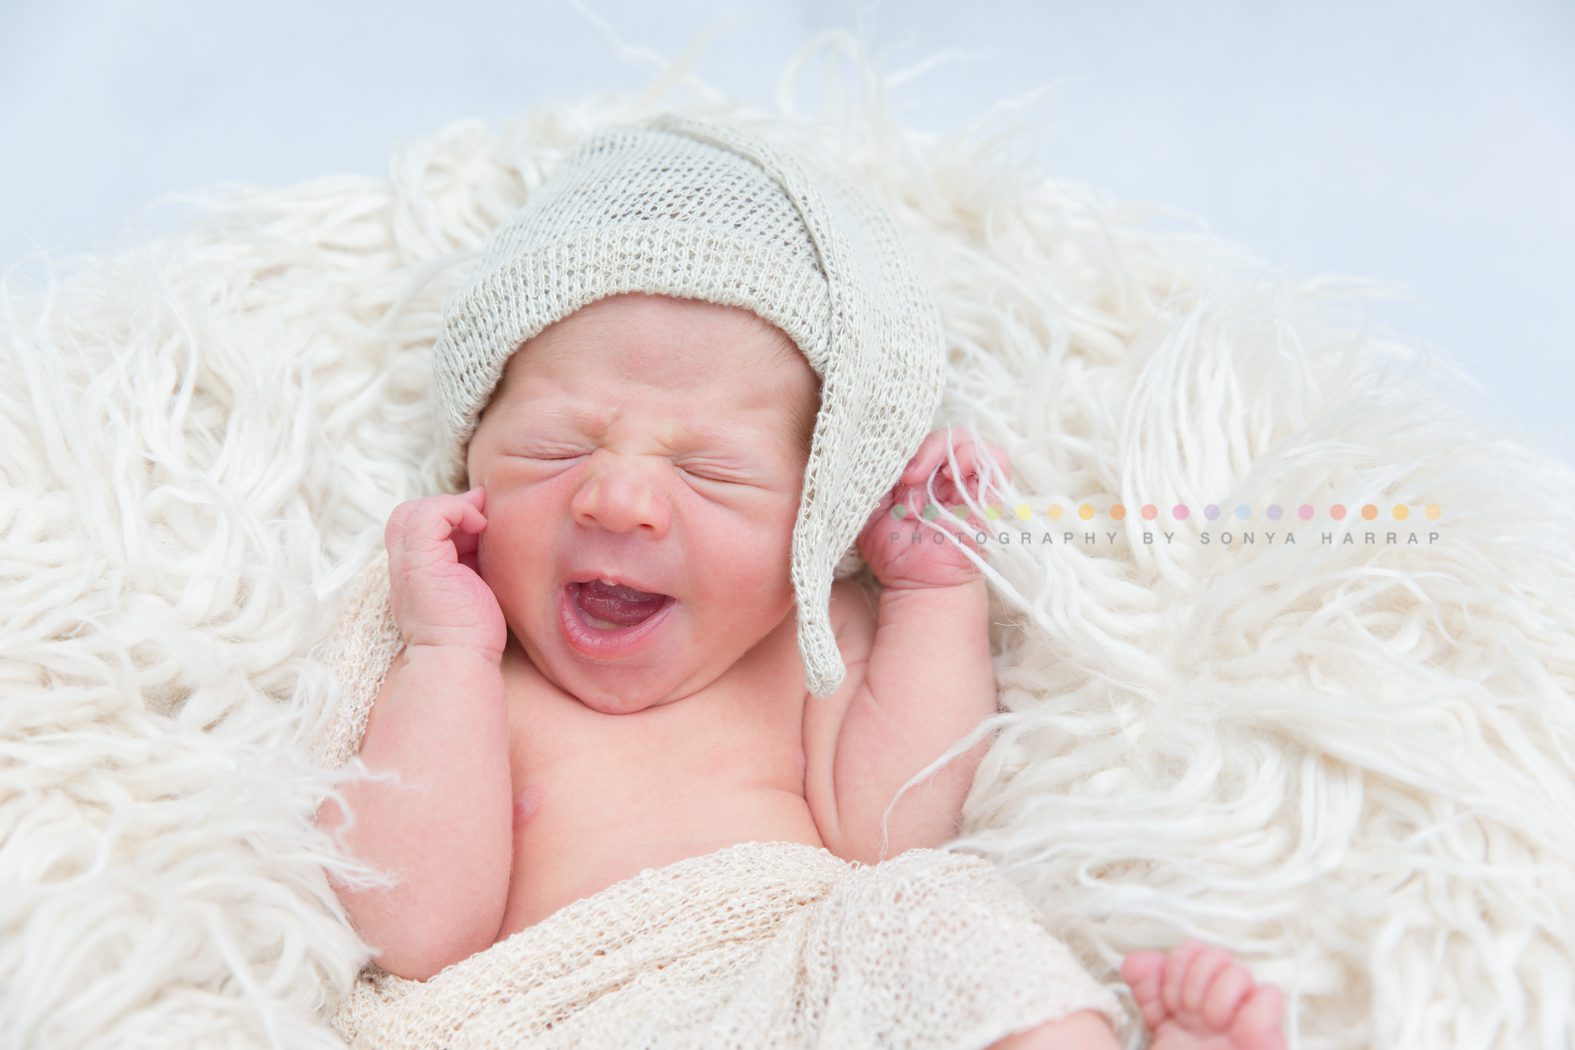 sonya-harrap-newborn-photography-hertfordshire-and-london-baby-photography-9691